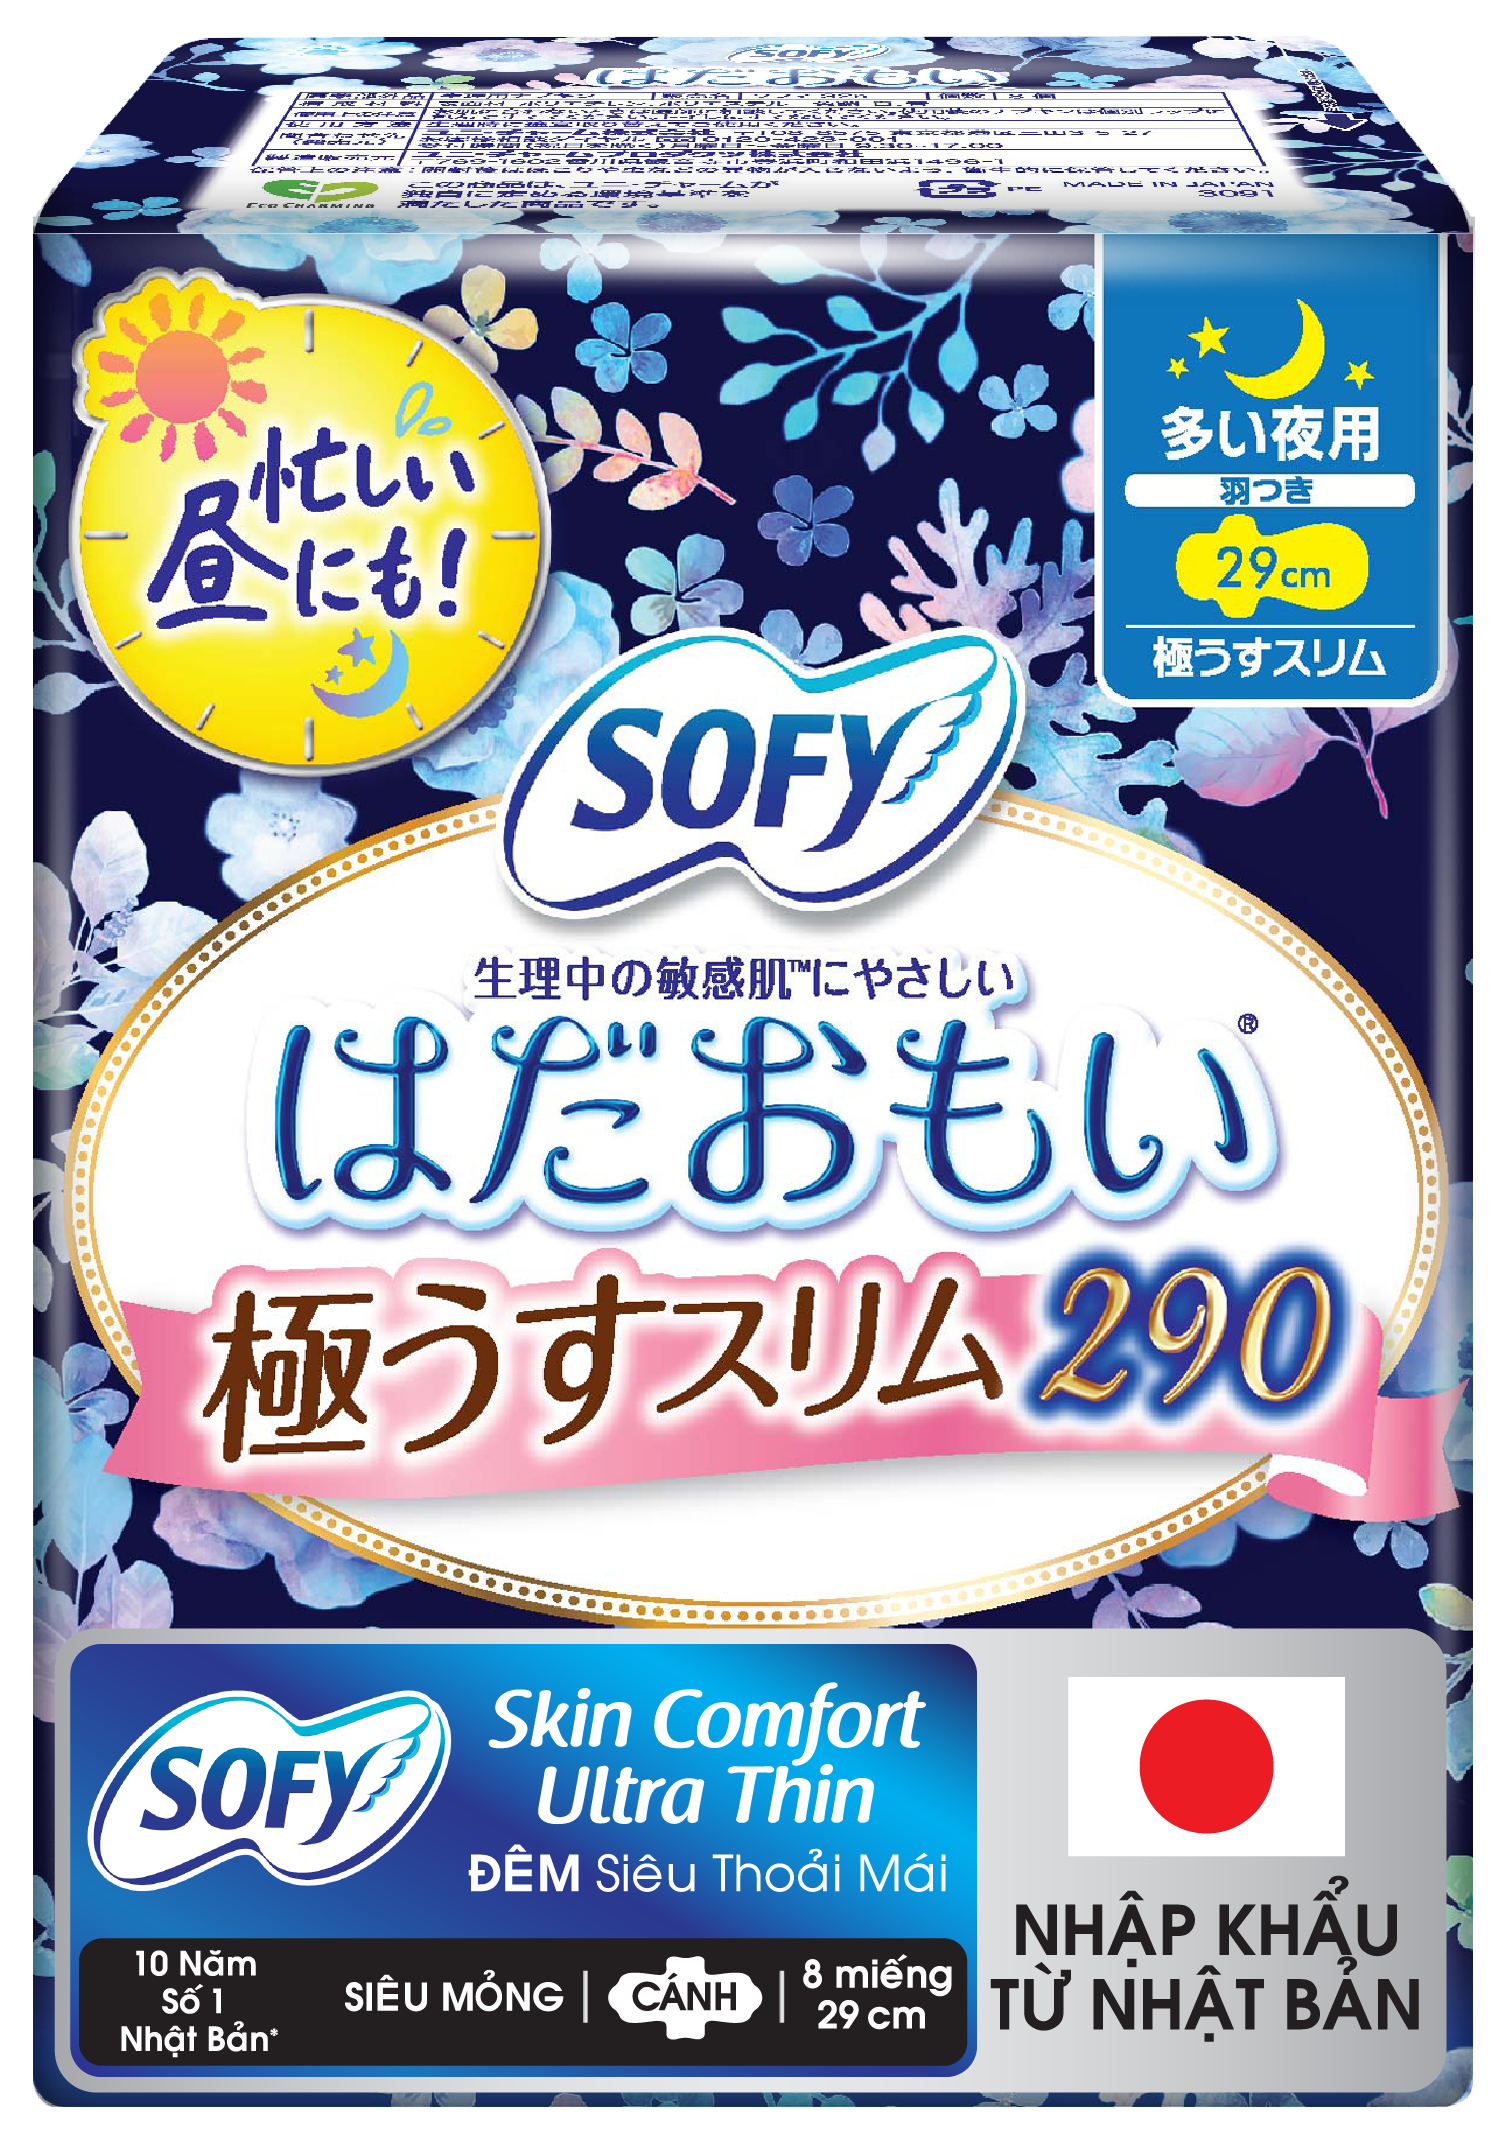 Sofy Skin Comfort Mỏng Cánh 29 cm